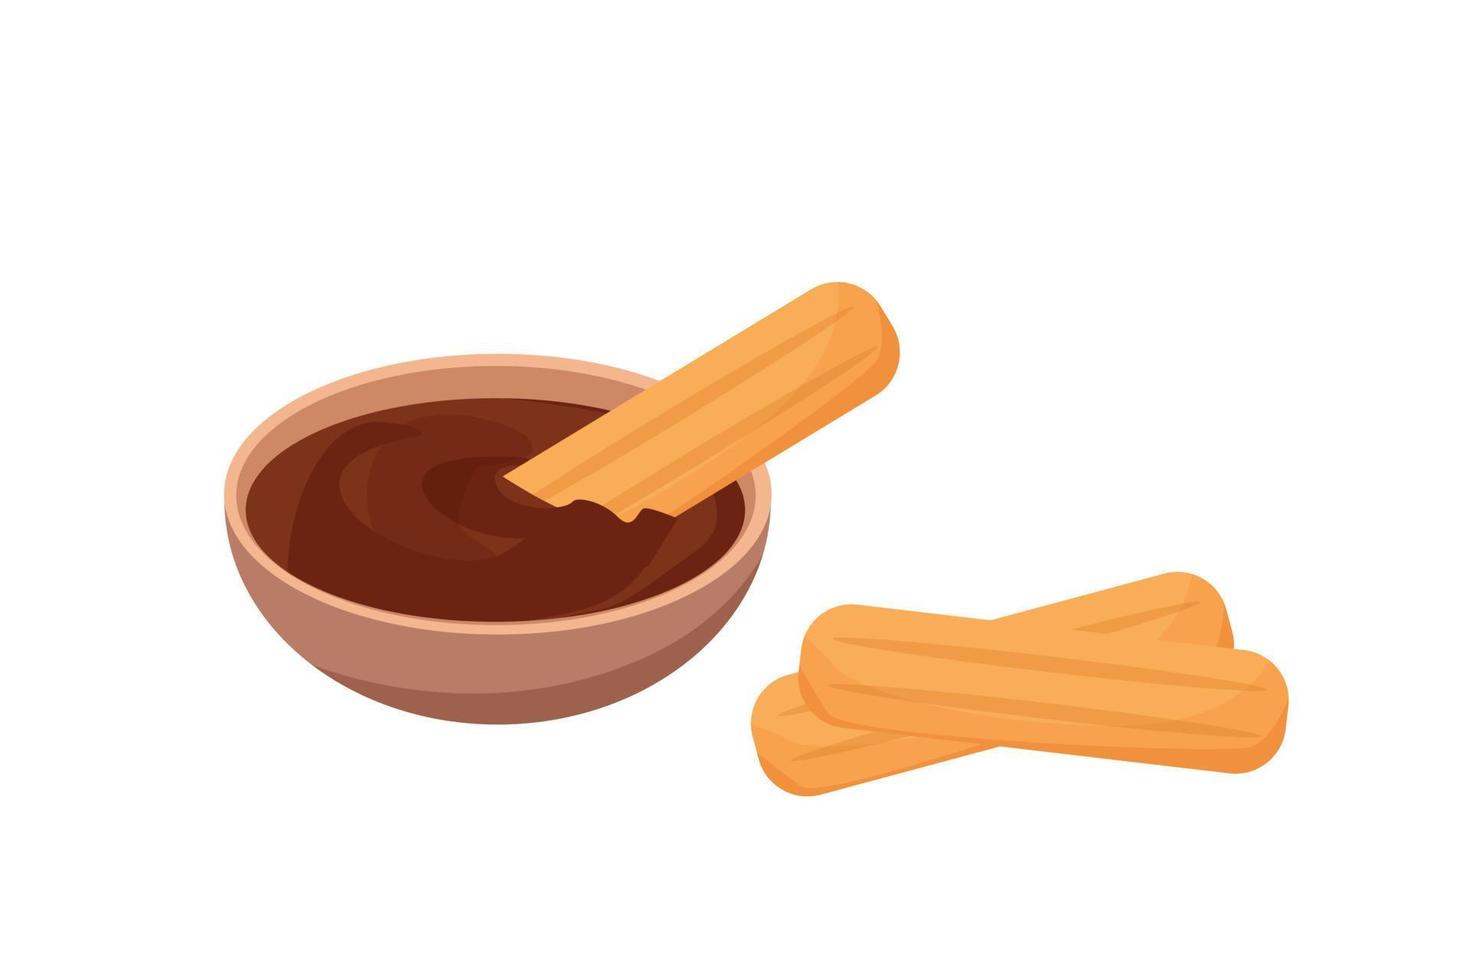 churros de pastelería mexicana. postre dulce. ilustración de dibujos animados de vectores